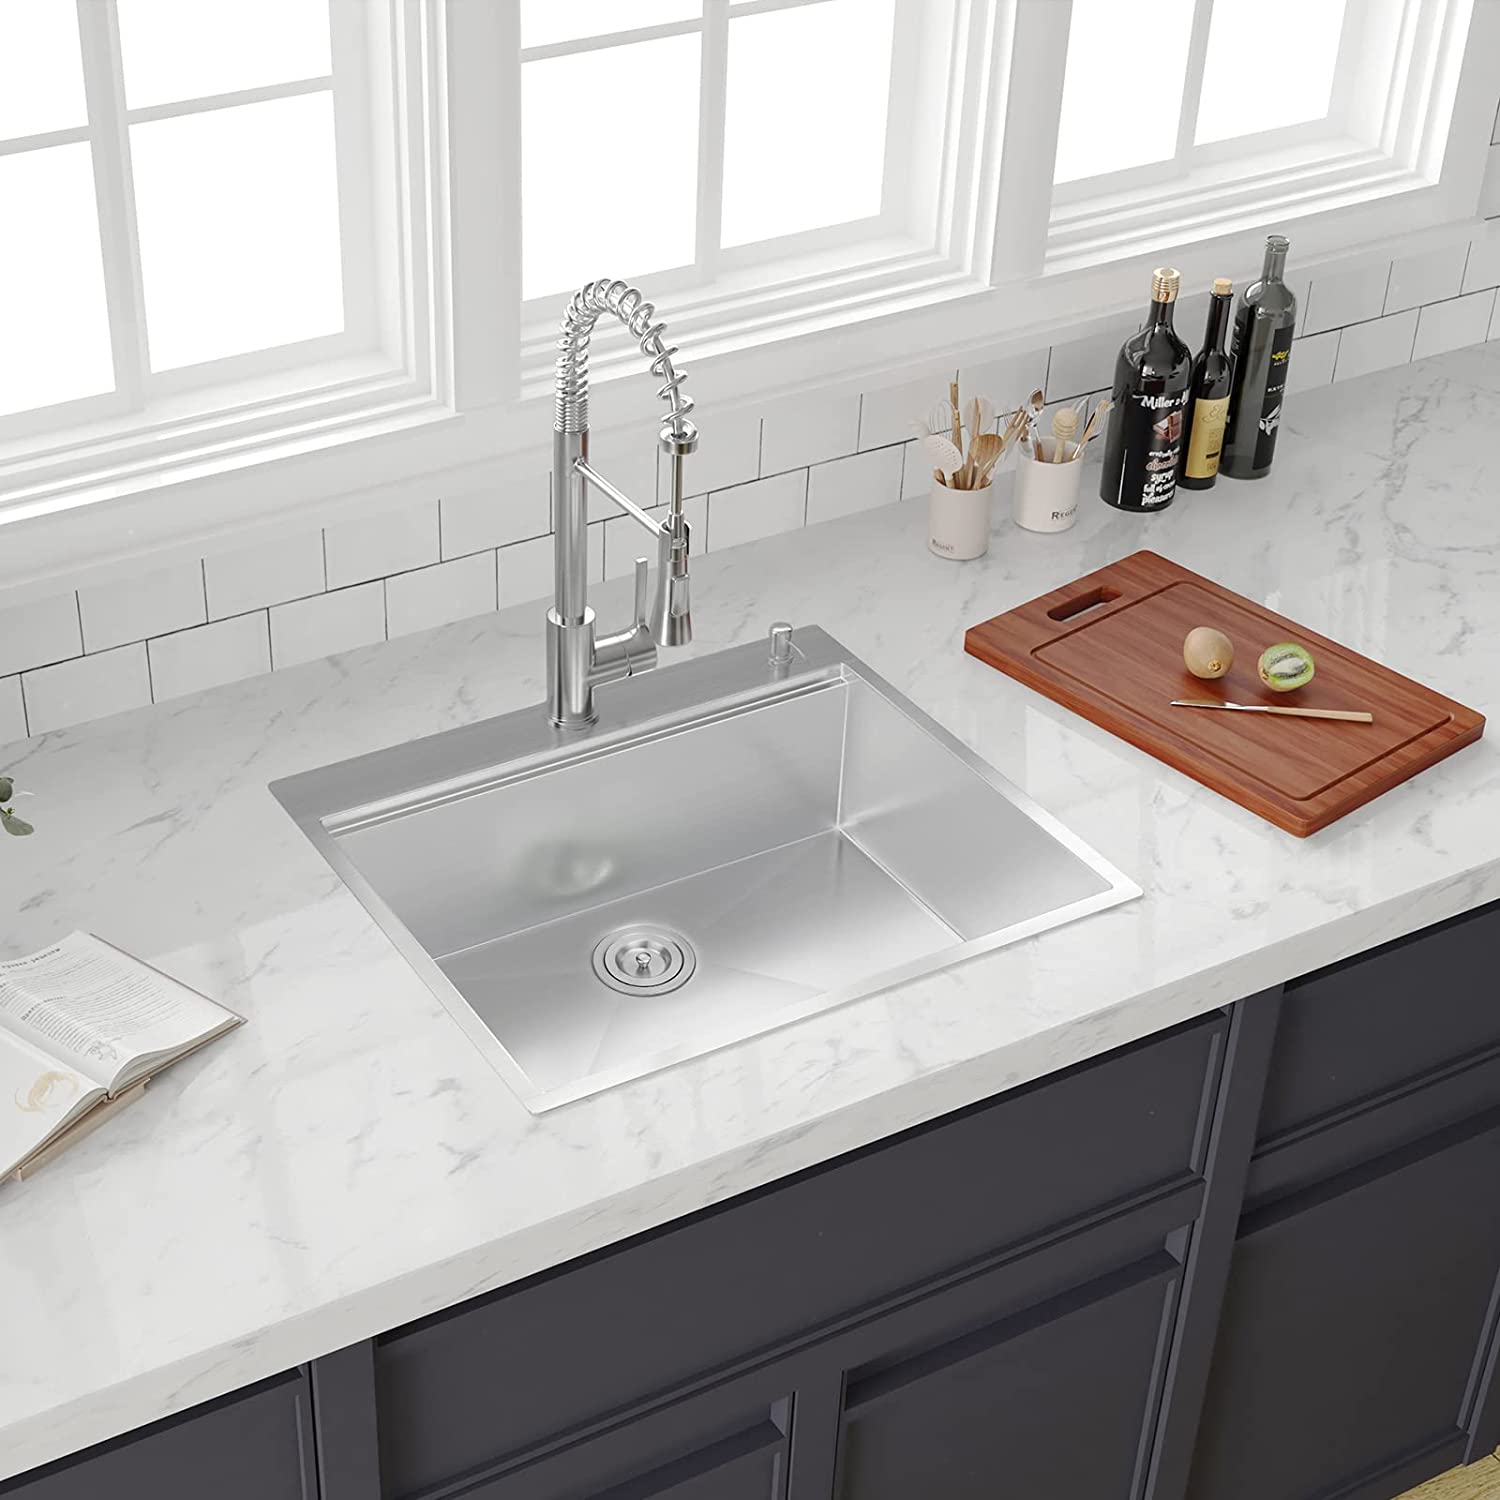 25 x 22 inch Drop-in Kitchen Sink, Handmade Workstation Kitchen Sink 18  Gauge with Ledge, Topmount Stainless Steel Single Bowl Sink